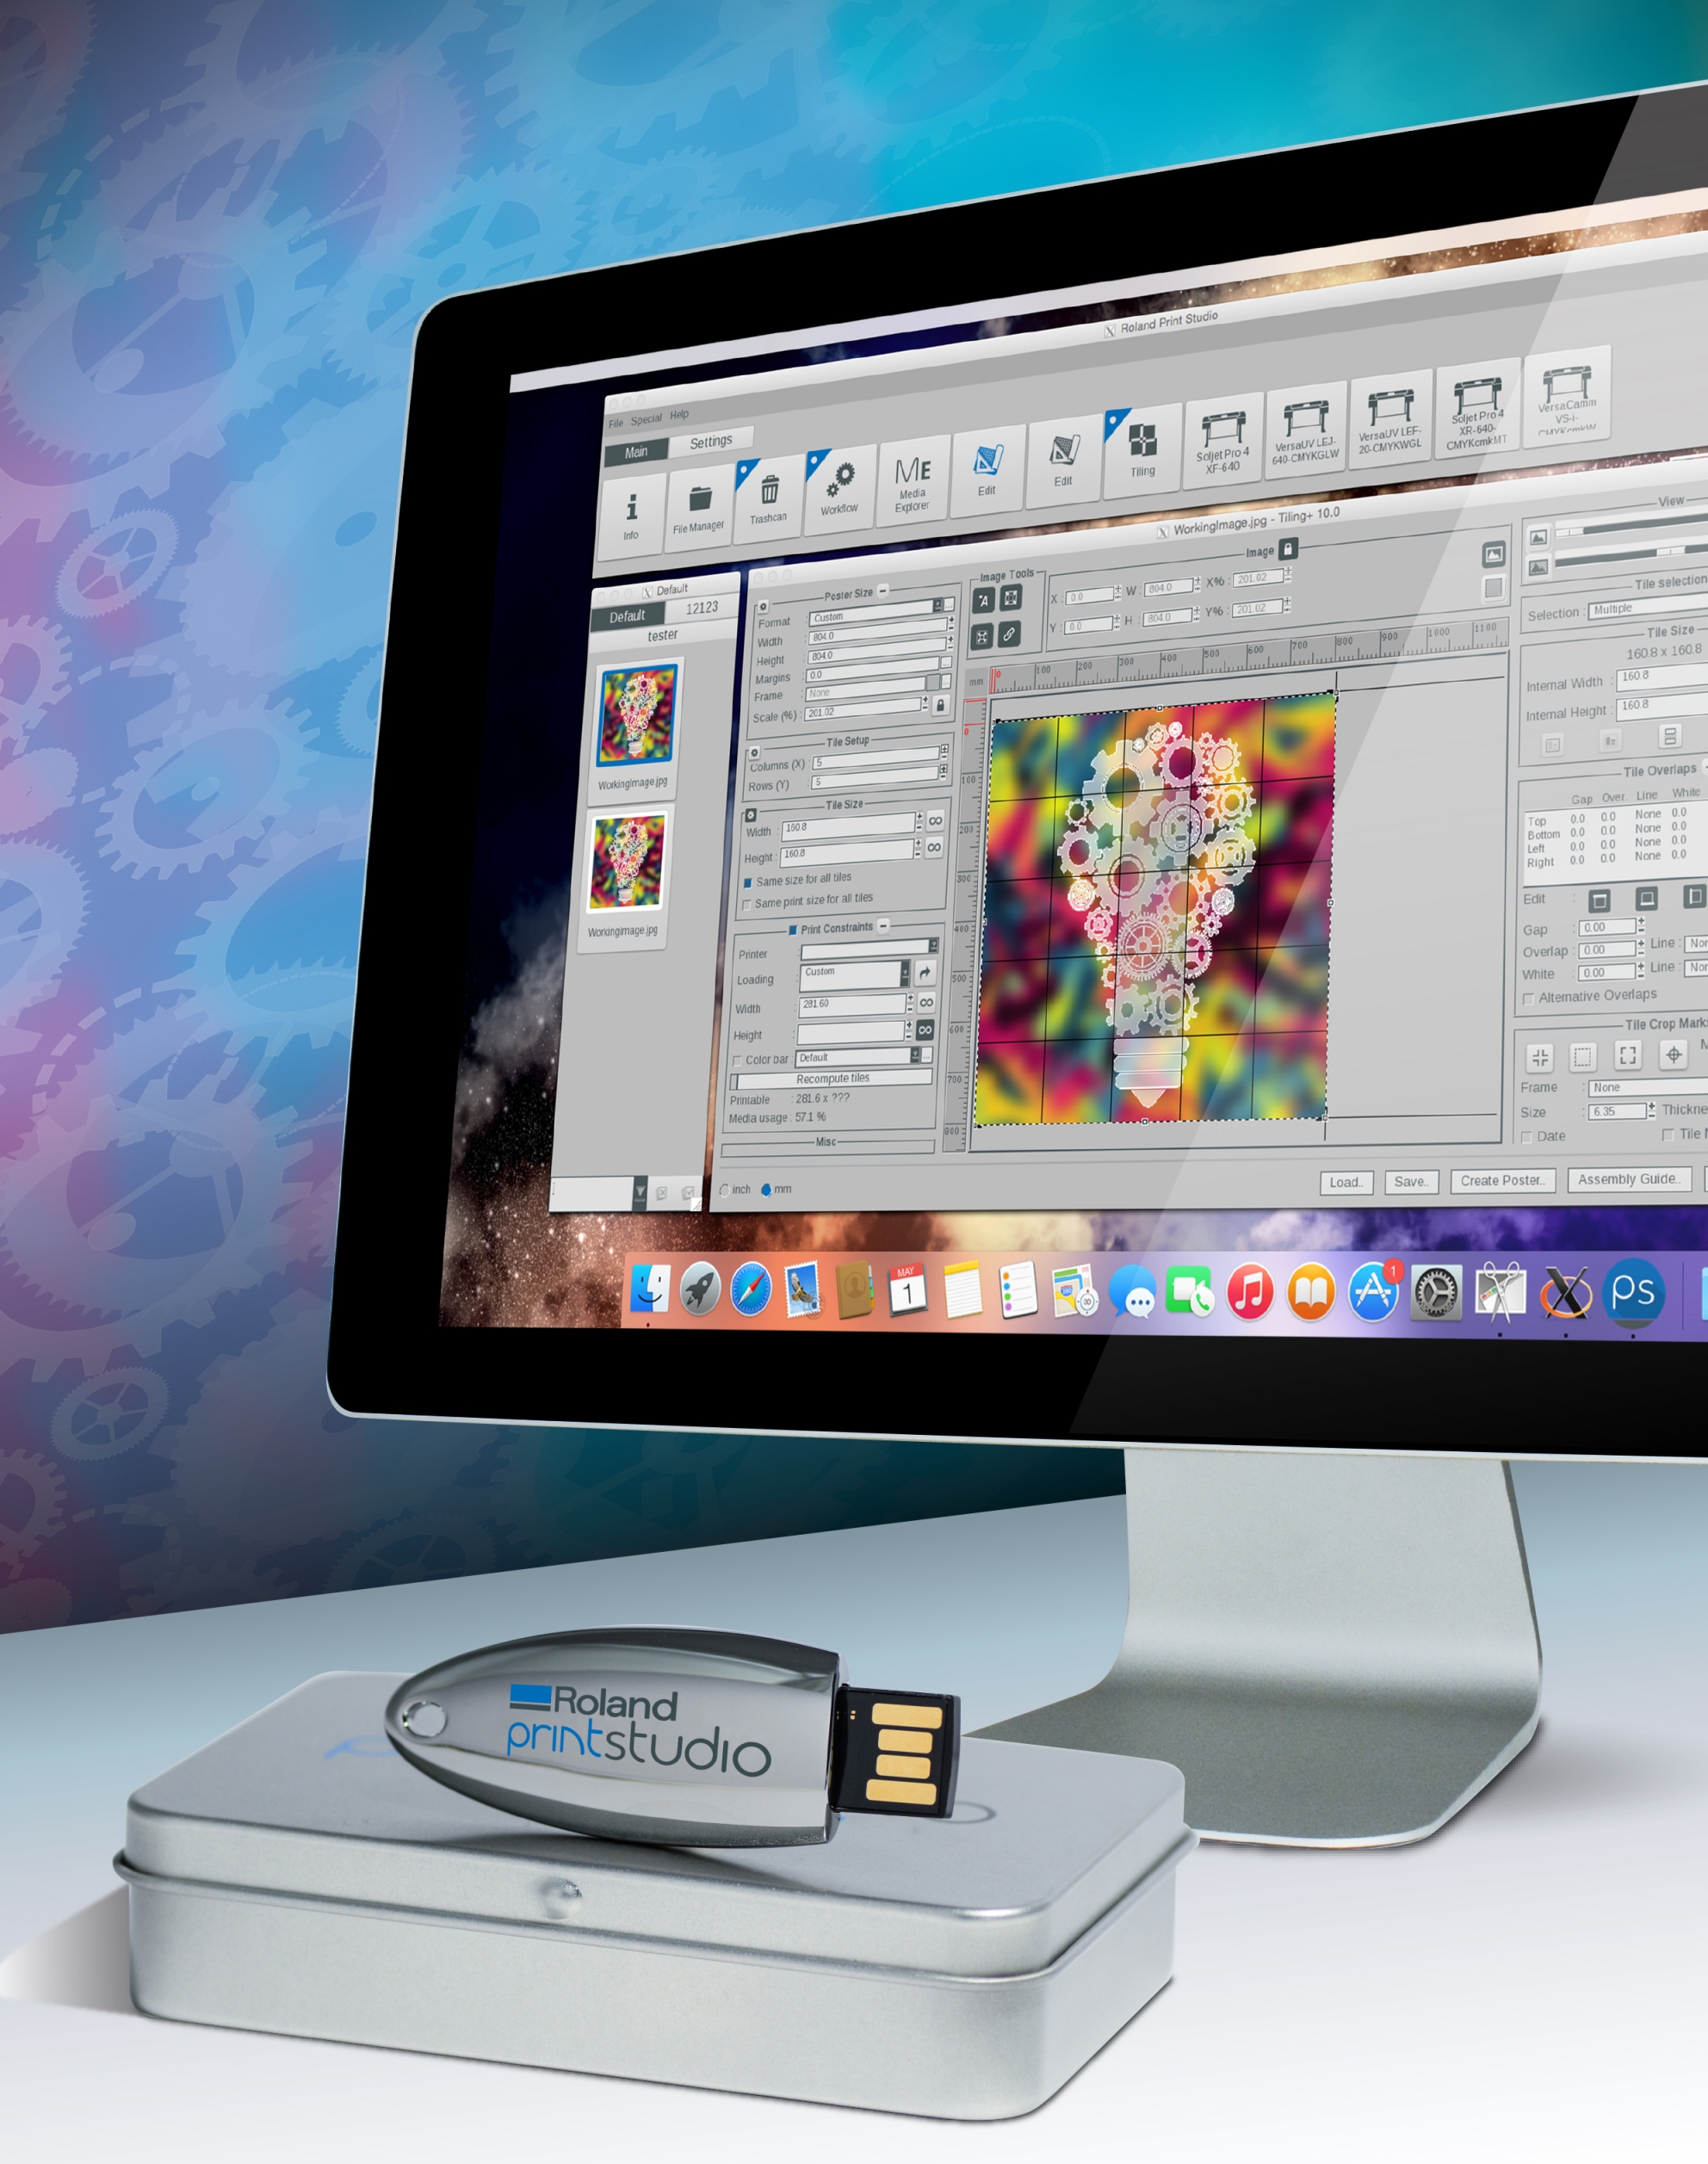 Roland dga introduces new rolandprintstudio rip software for mac